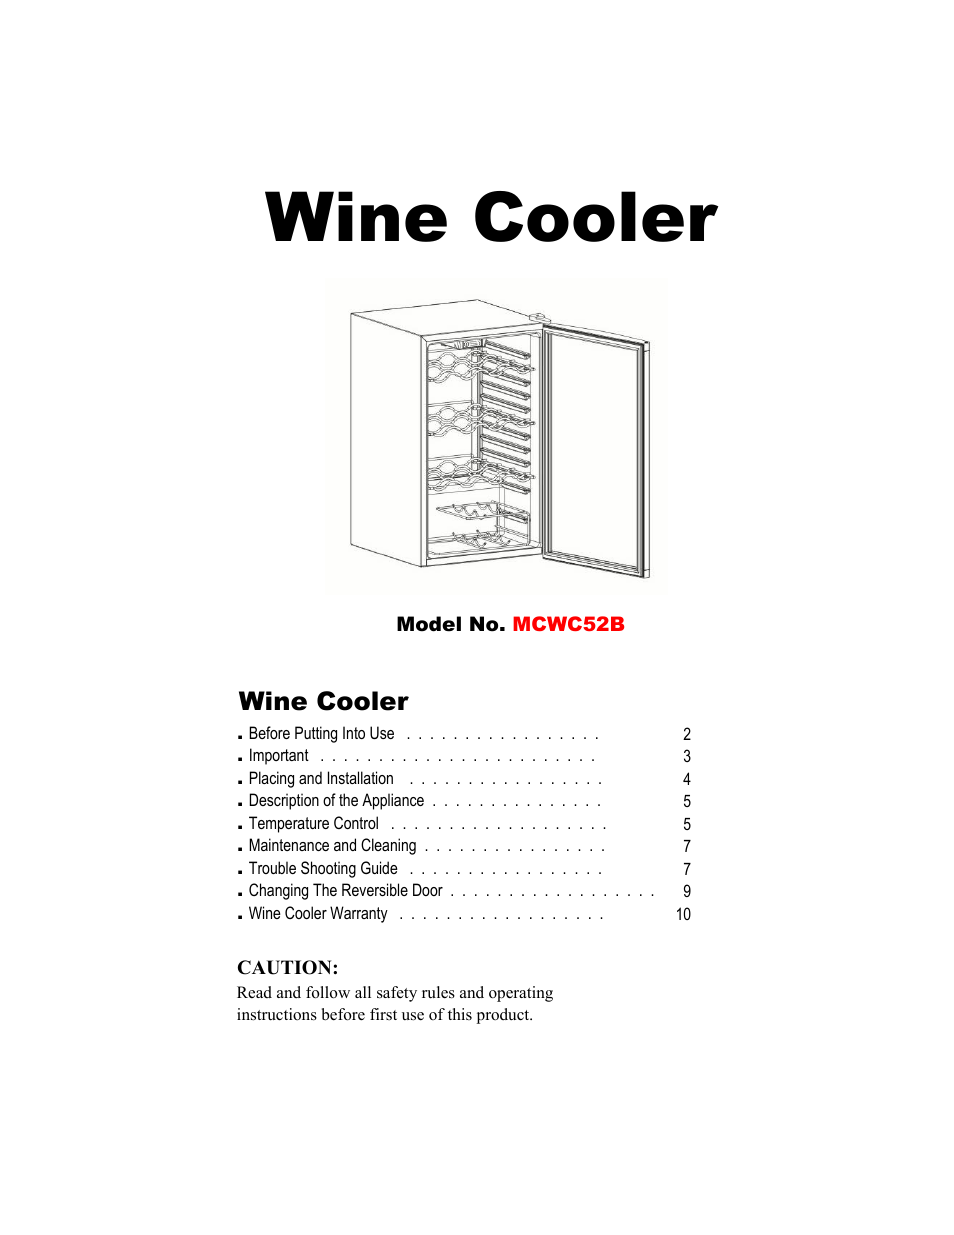 Wine Cooler MCWC52B